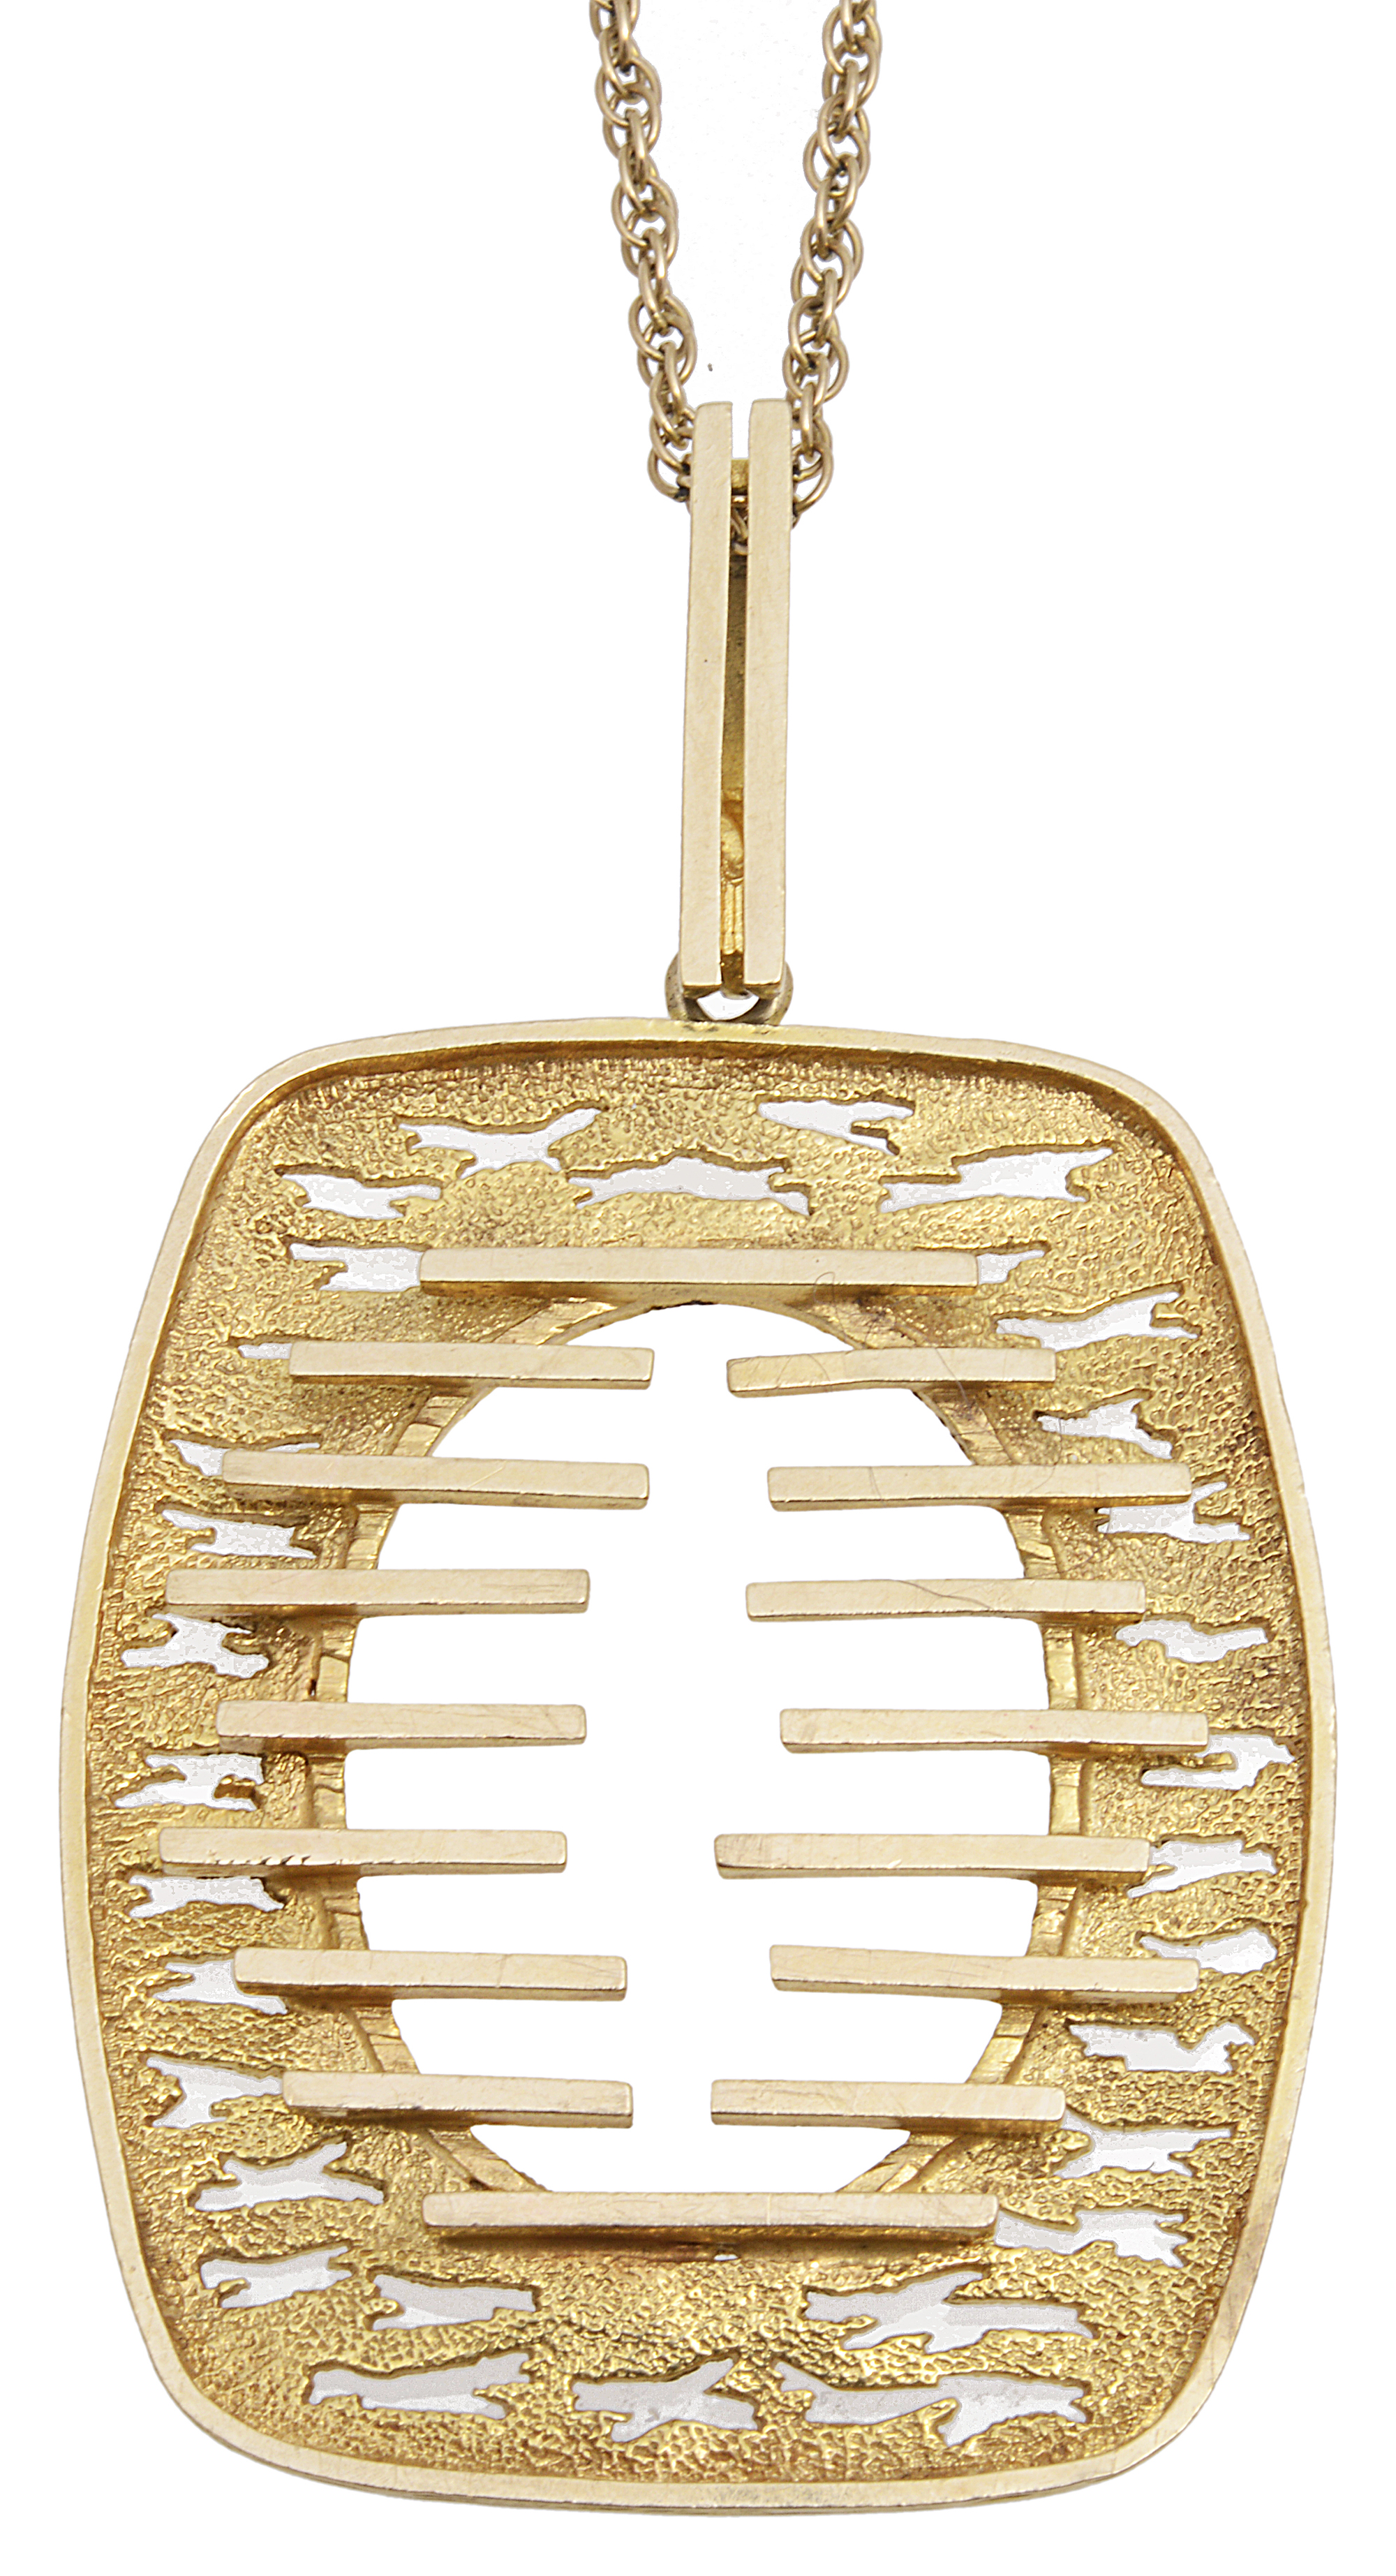 A modernist design gold pendant on chain